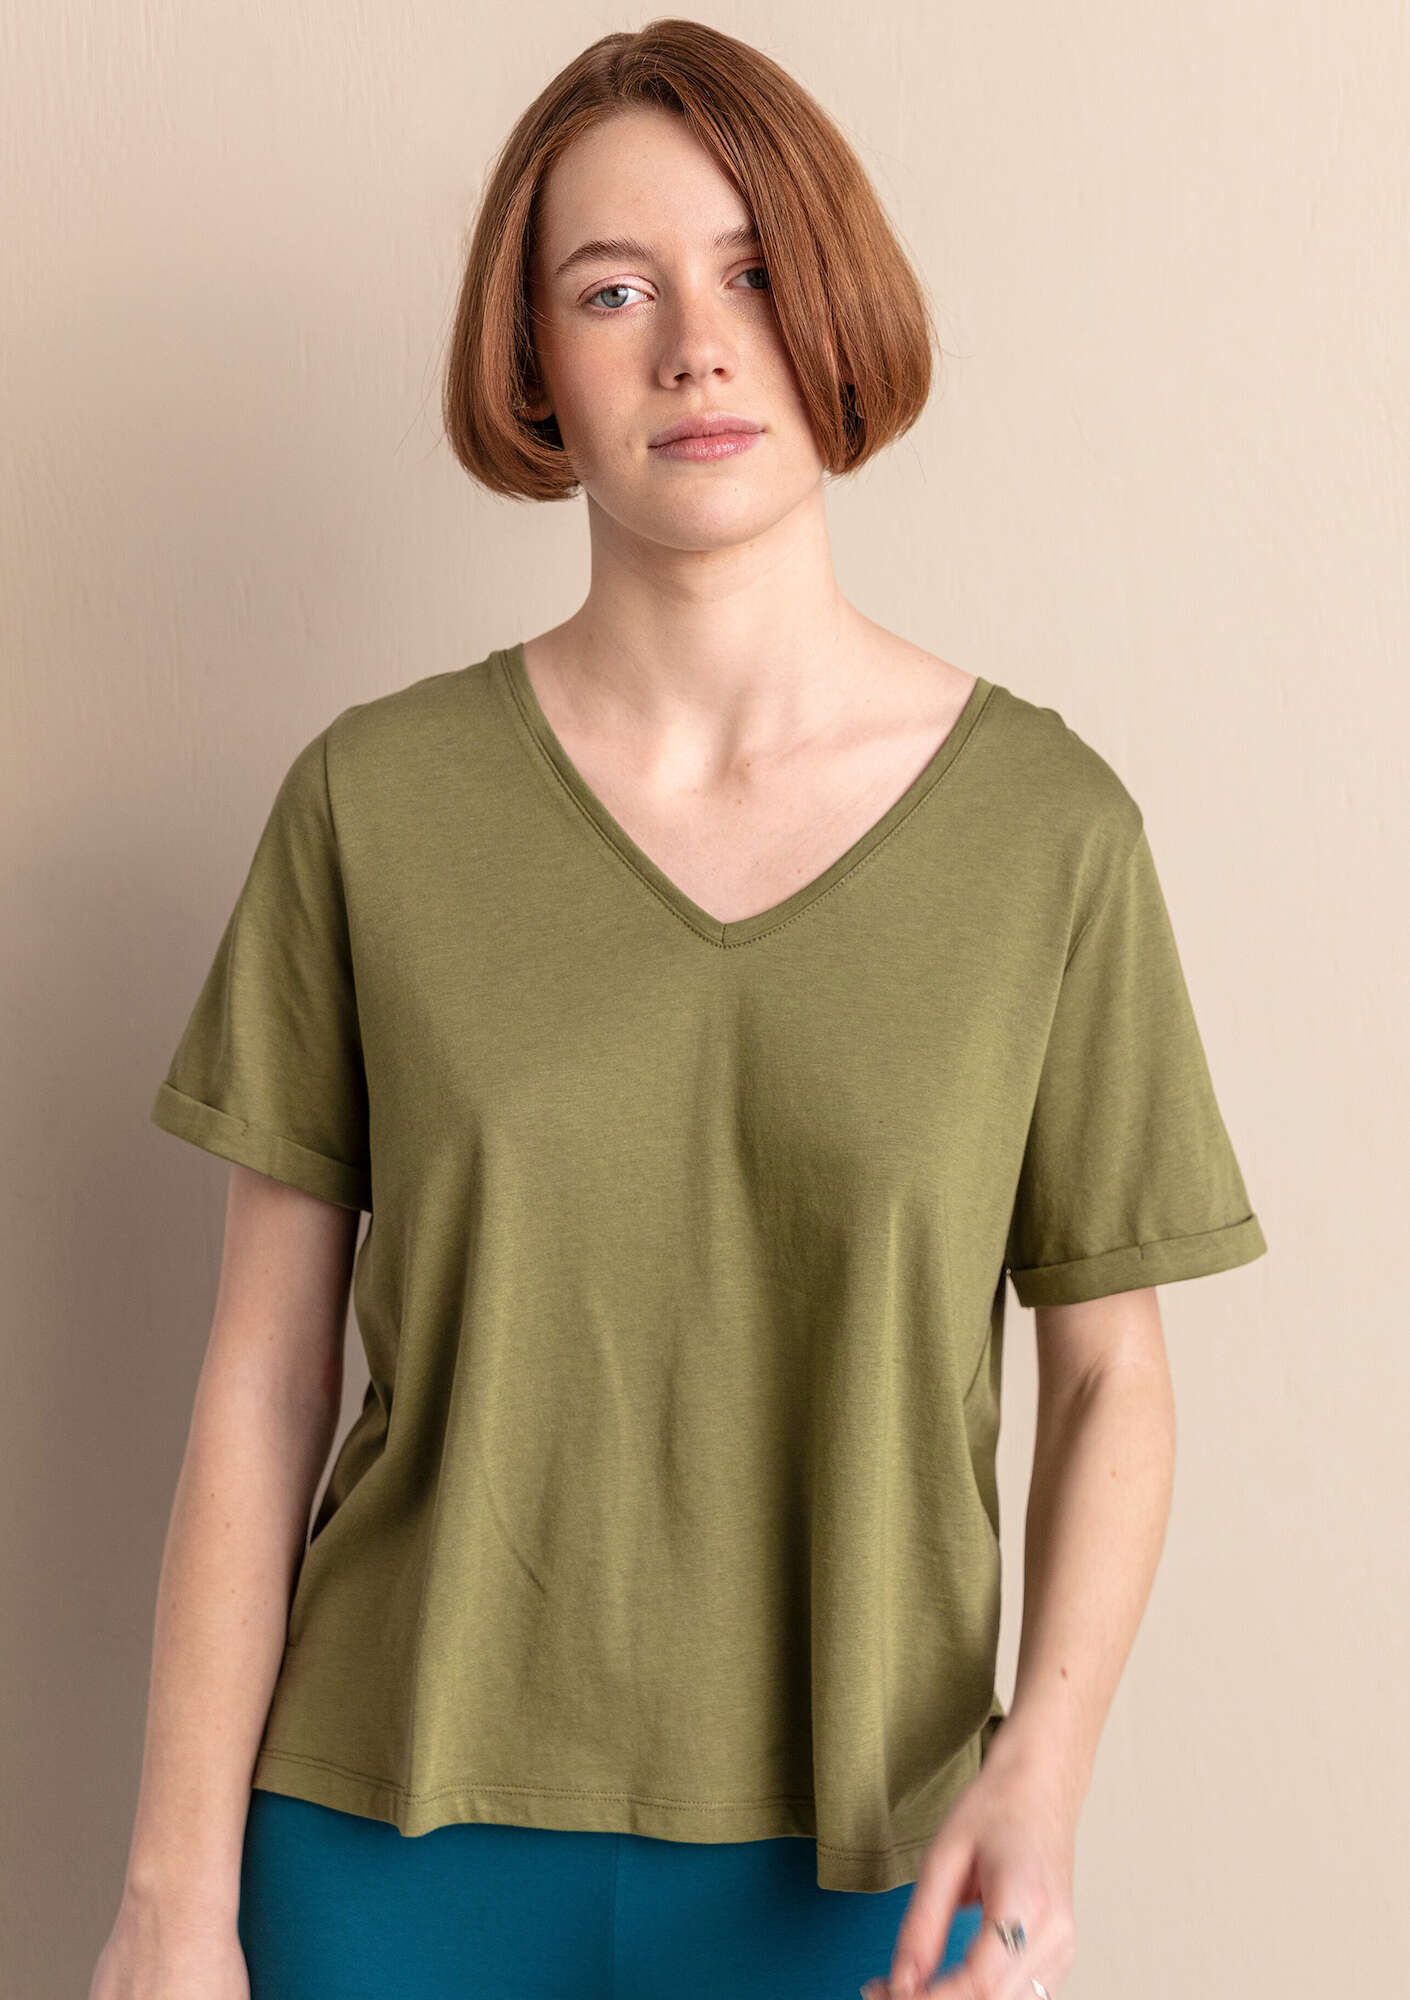 “Juliet” jersey top in organic cotton/modal cedar